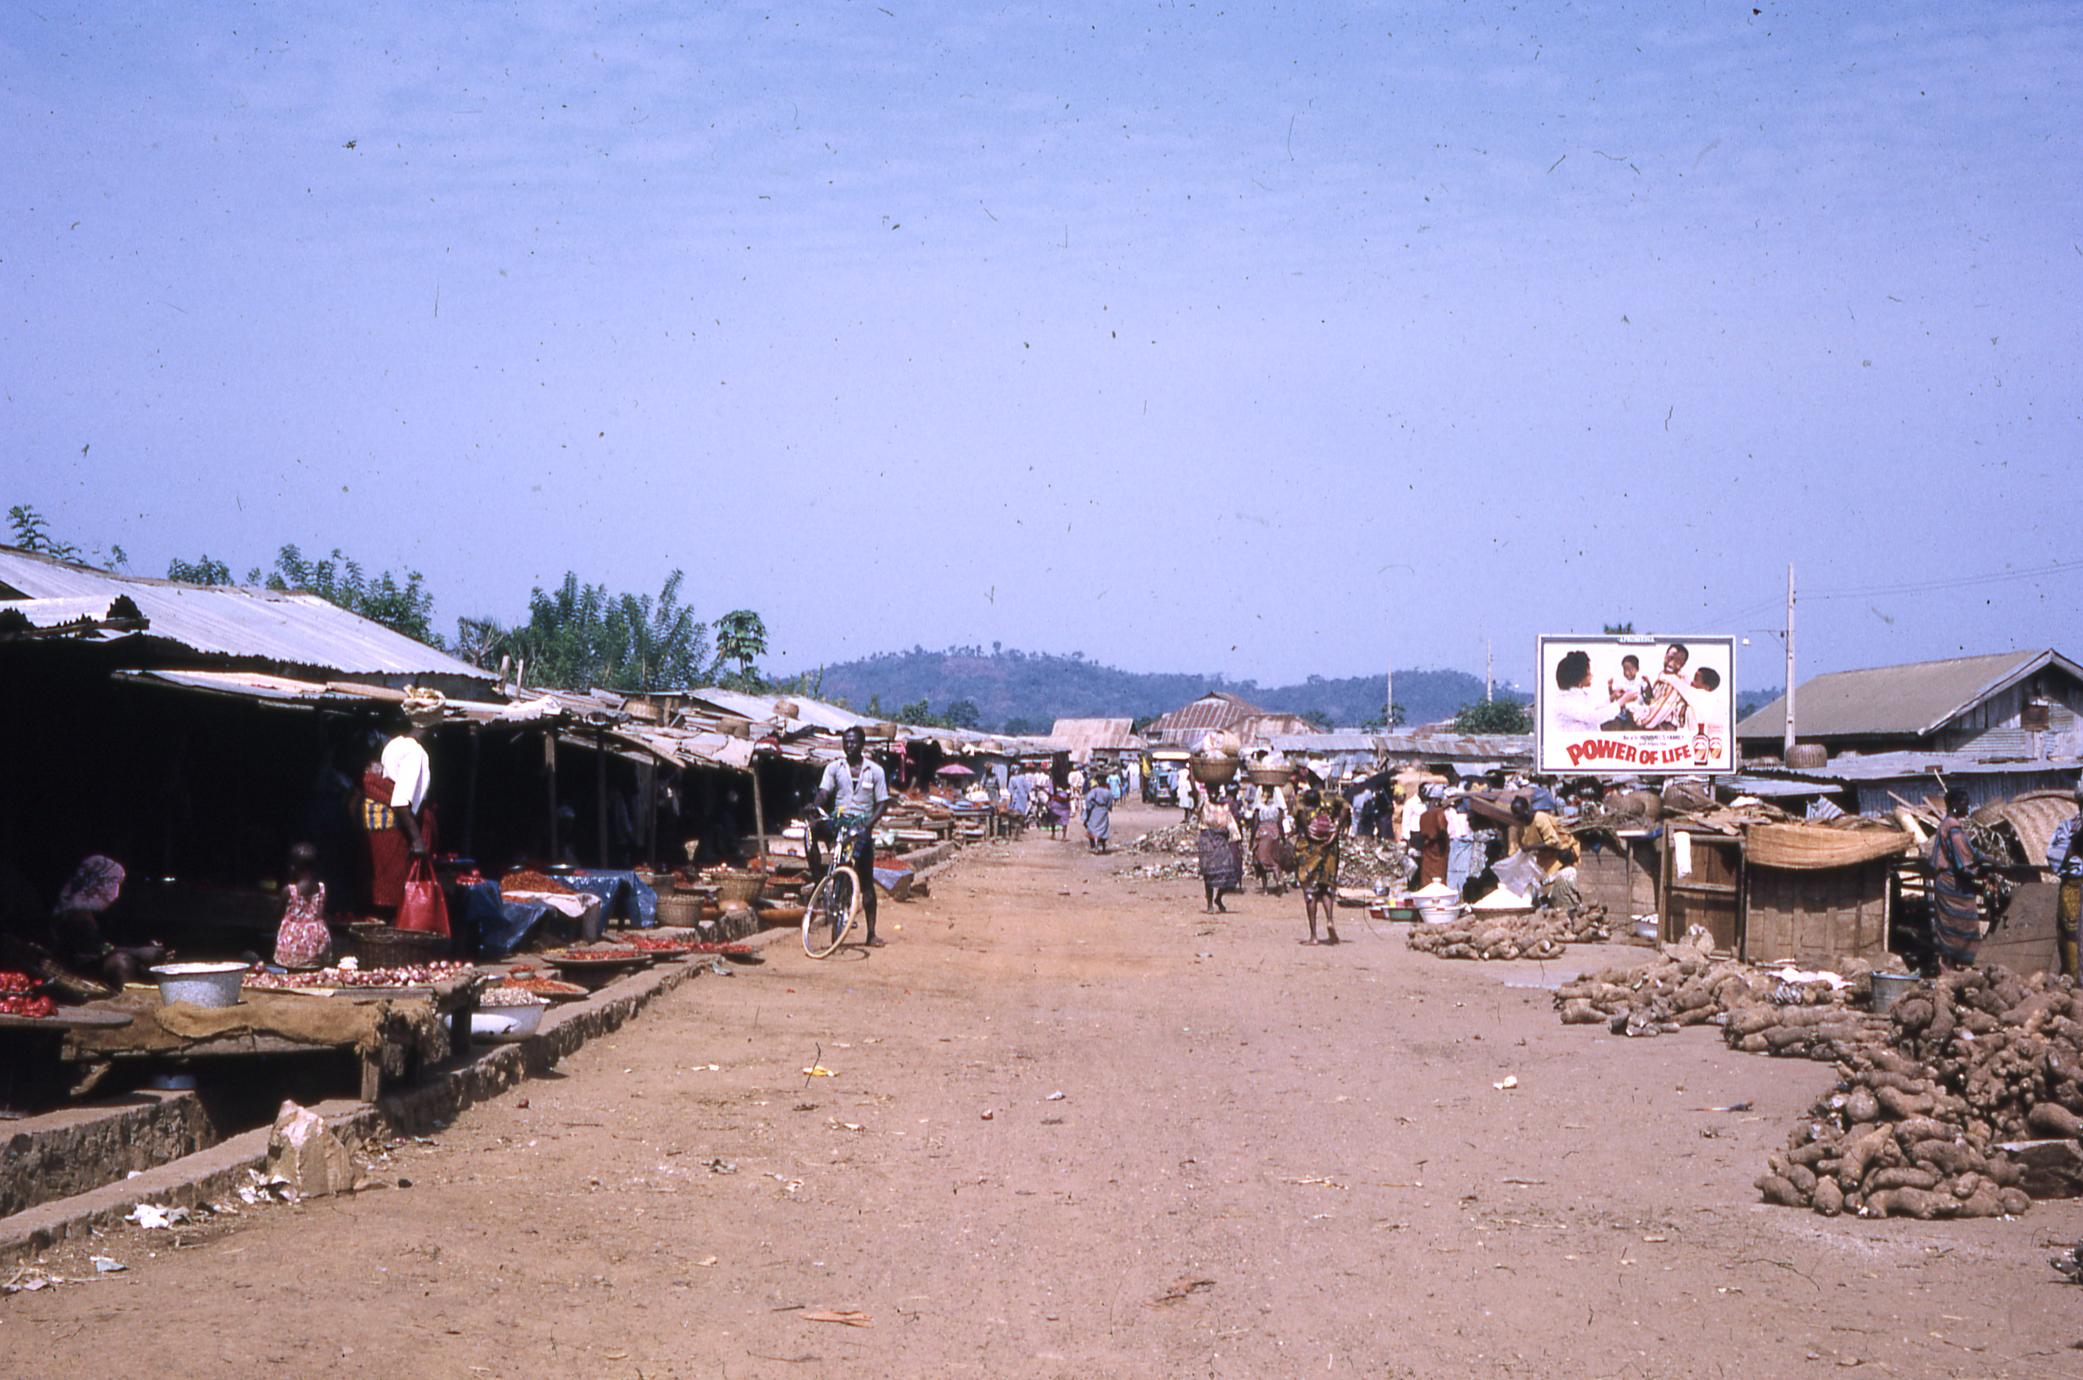 Main street of market